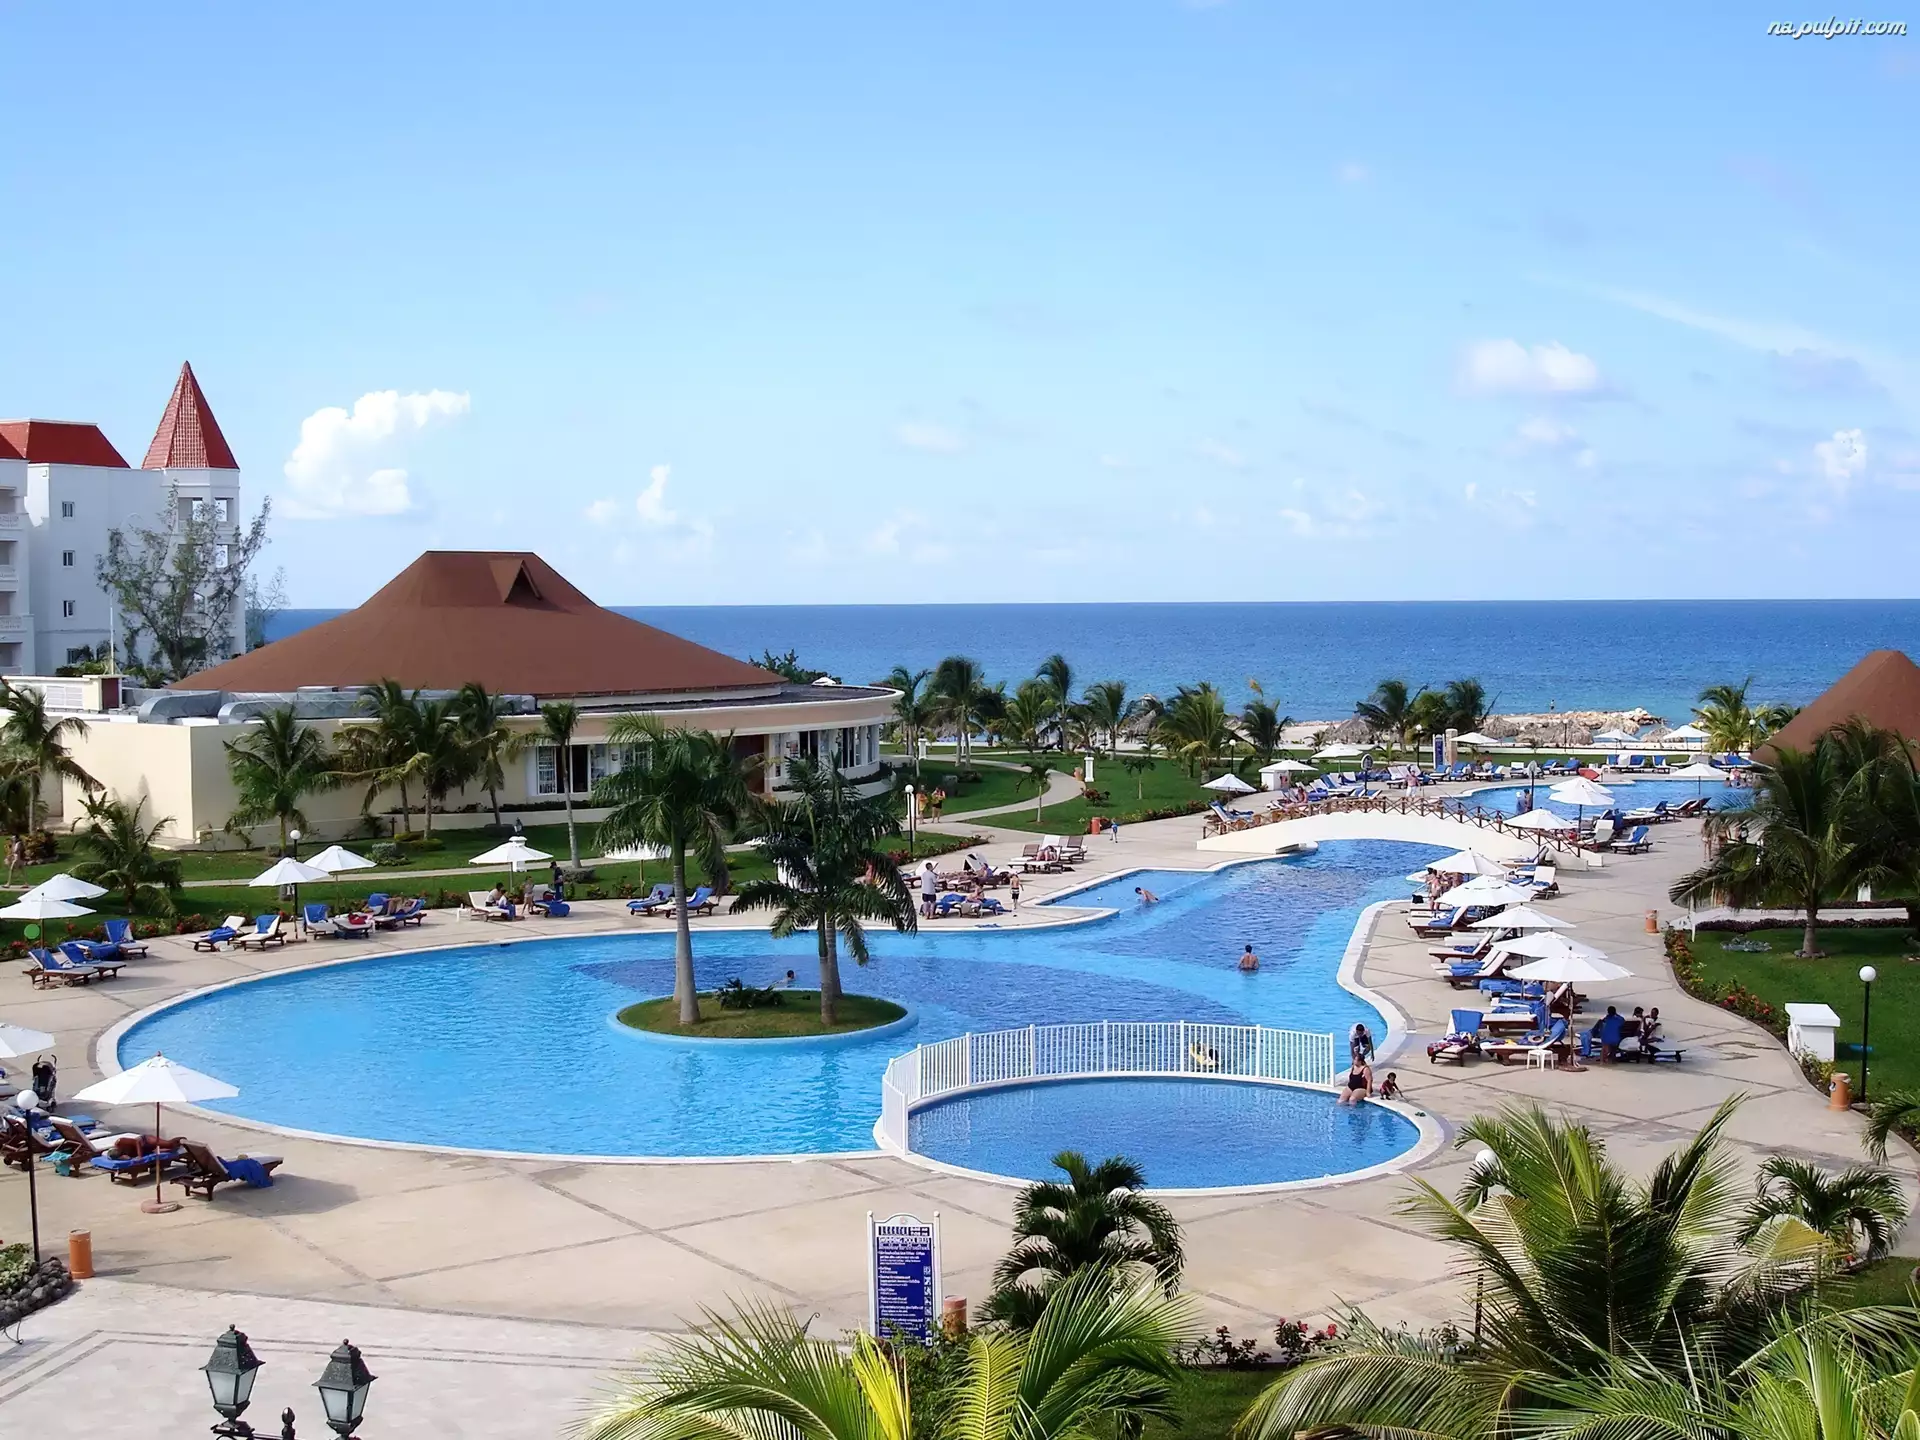 Hotel, Jamajka, Basen, Ocean